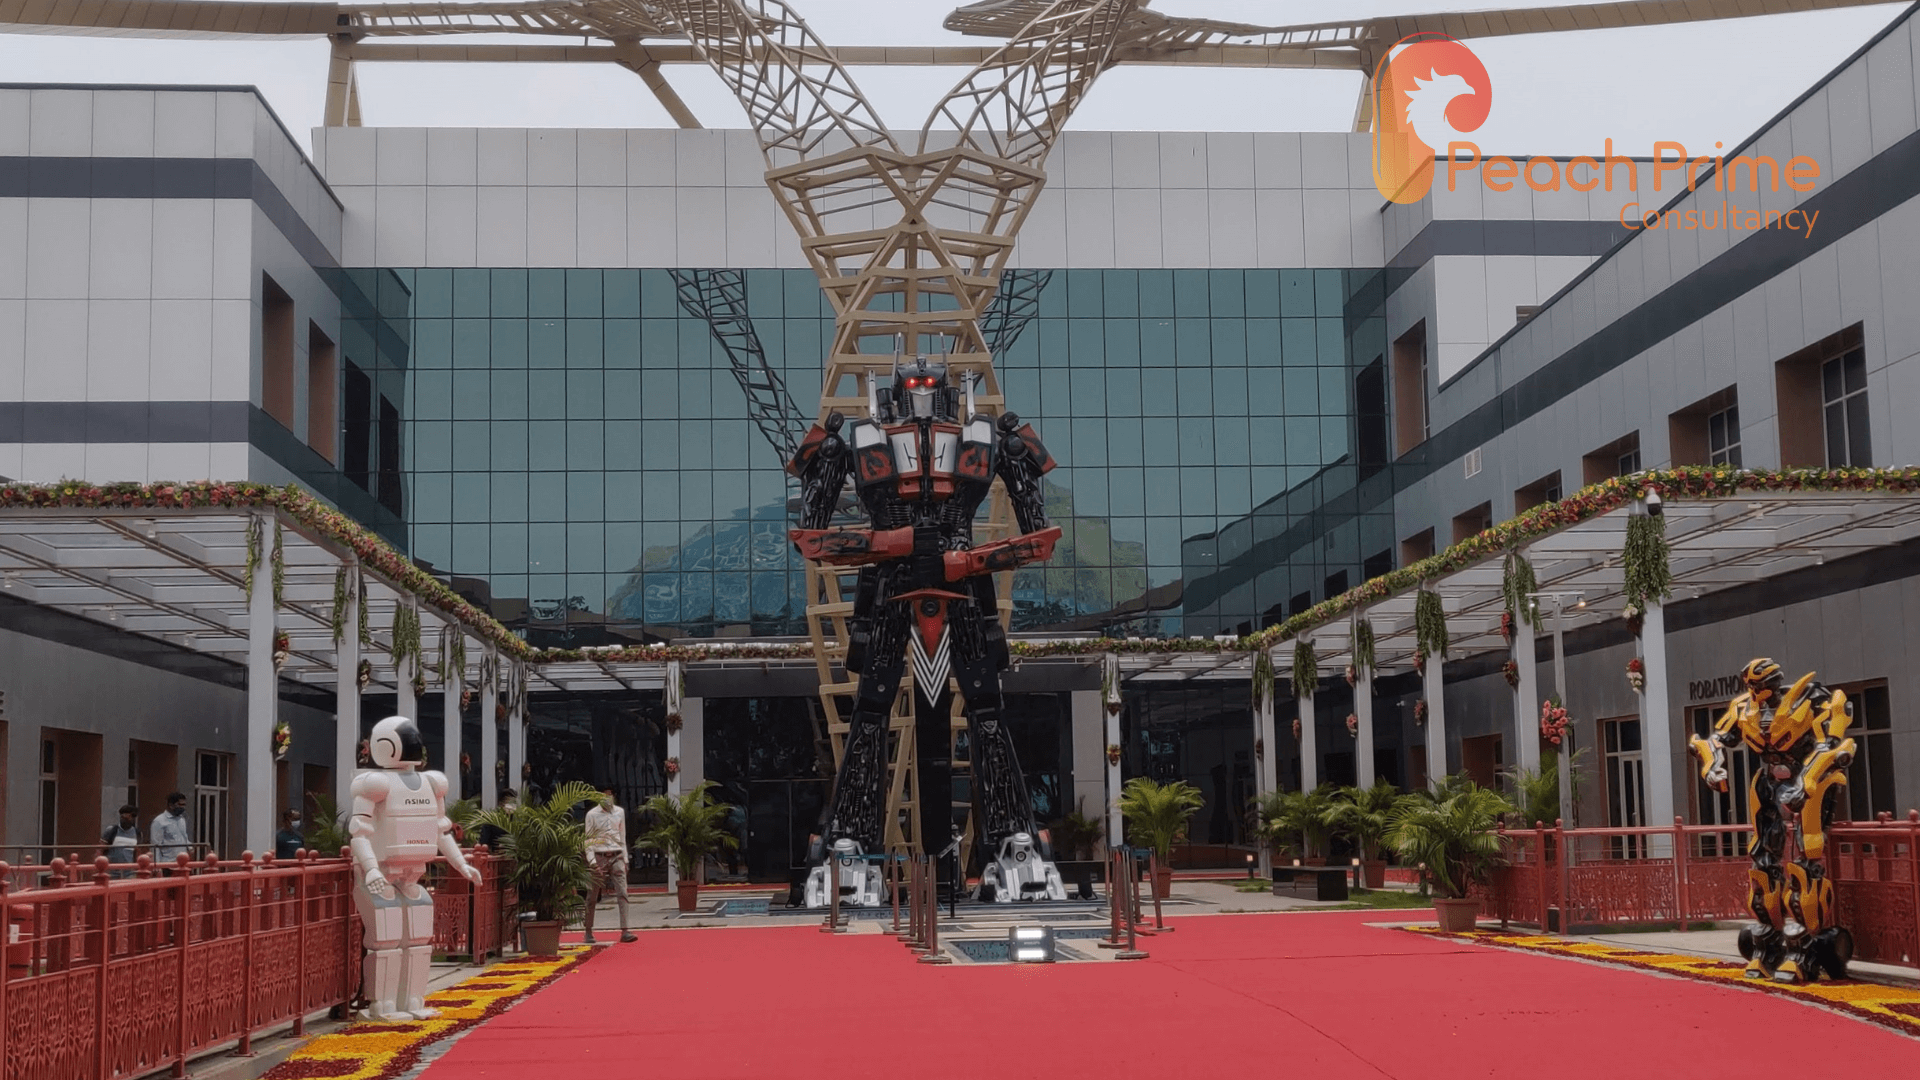 Majestic 8-Meter-Tall Optimus Prime Transformer Sculpture at Science City